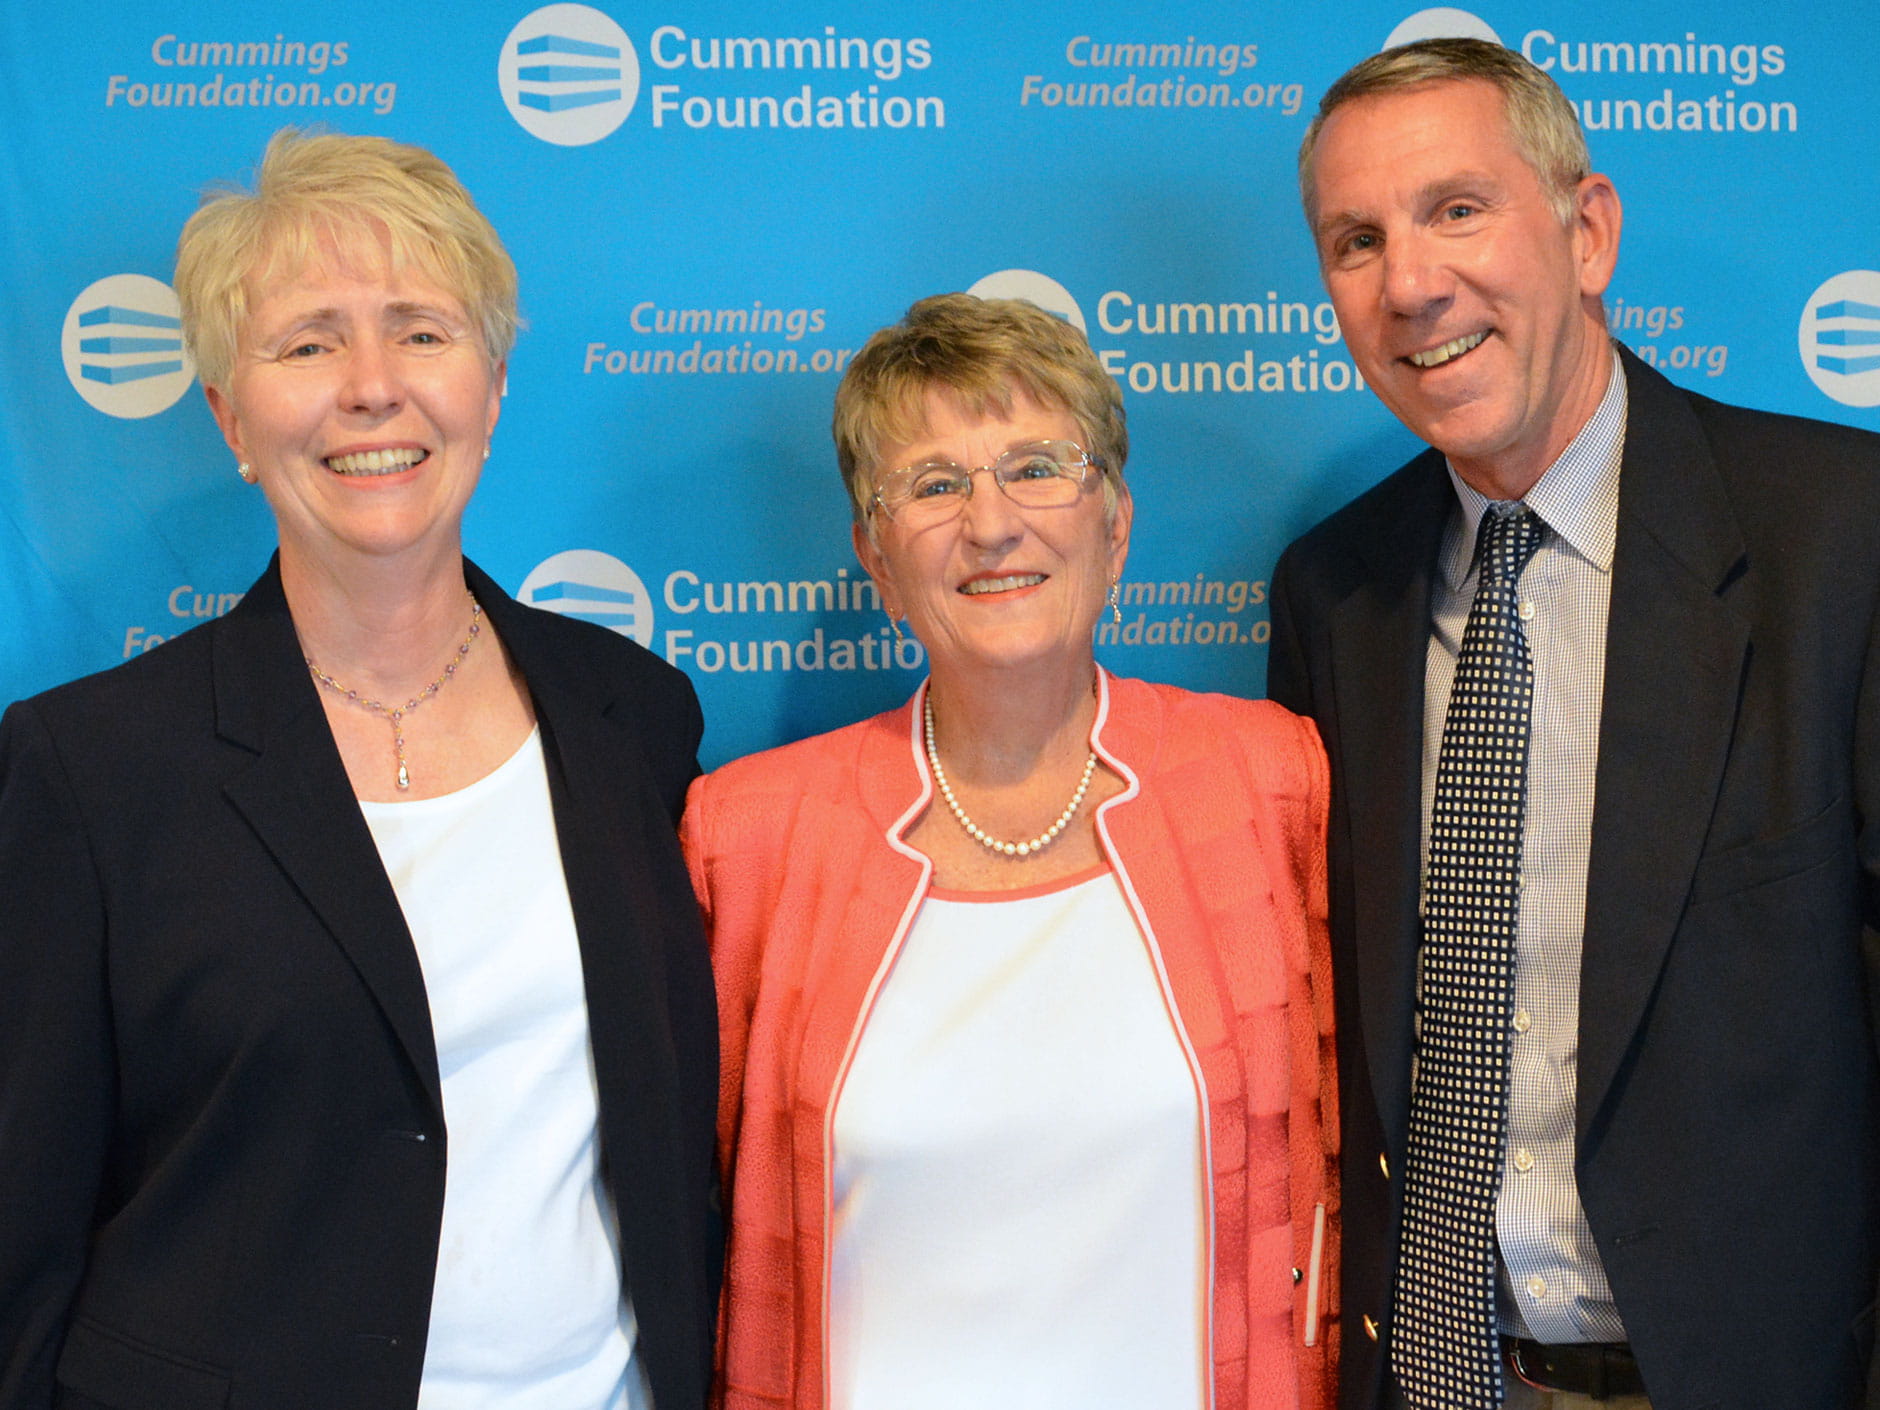 Joyce Cummings stands with Deirdre Sartorelli and David Vigneron of Endicott College